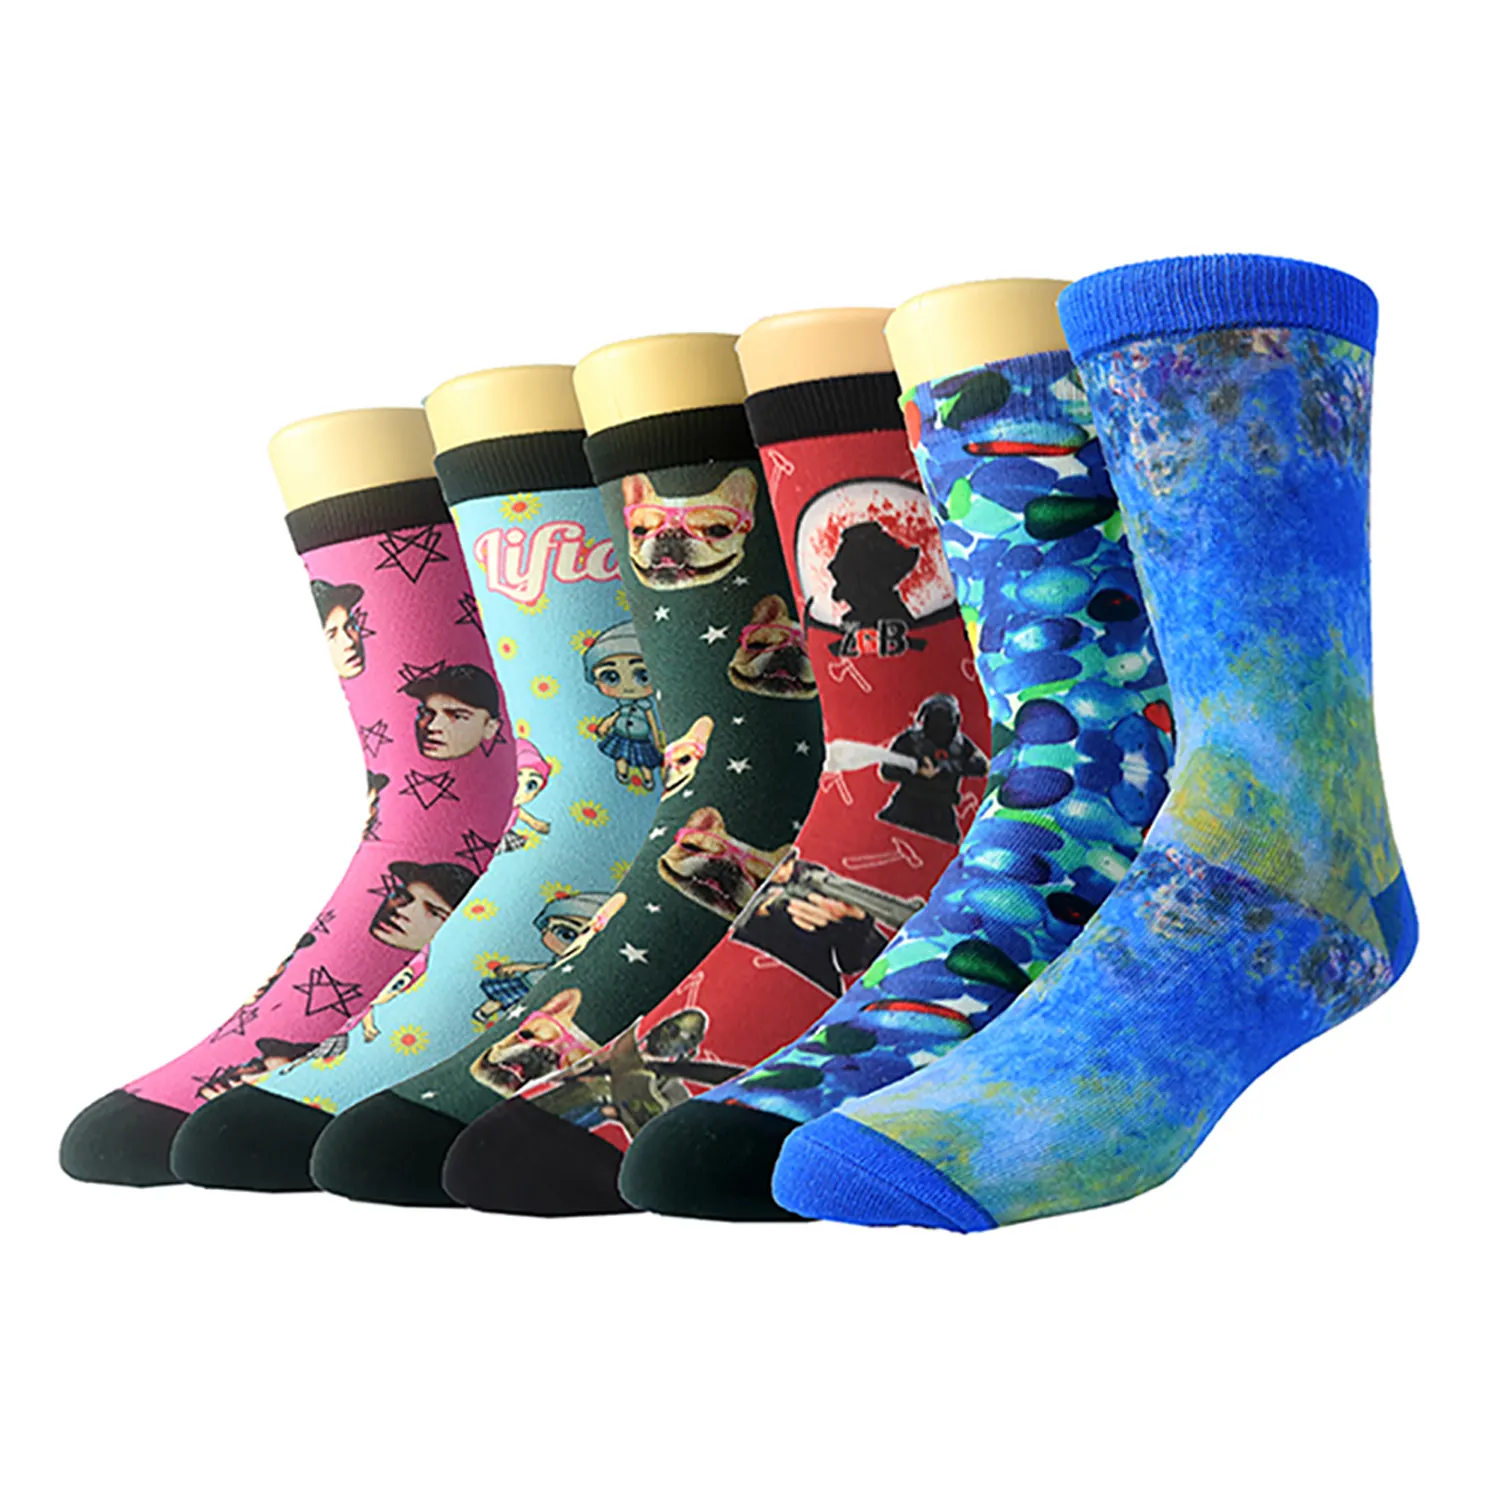 full color sublimation socks sock dye sublimation printing comfortable socks